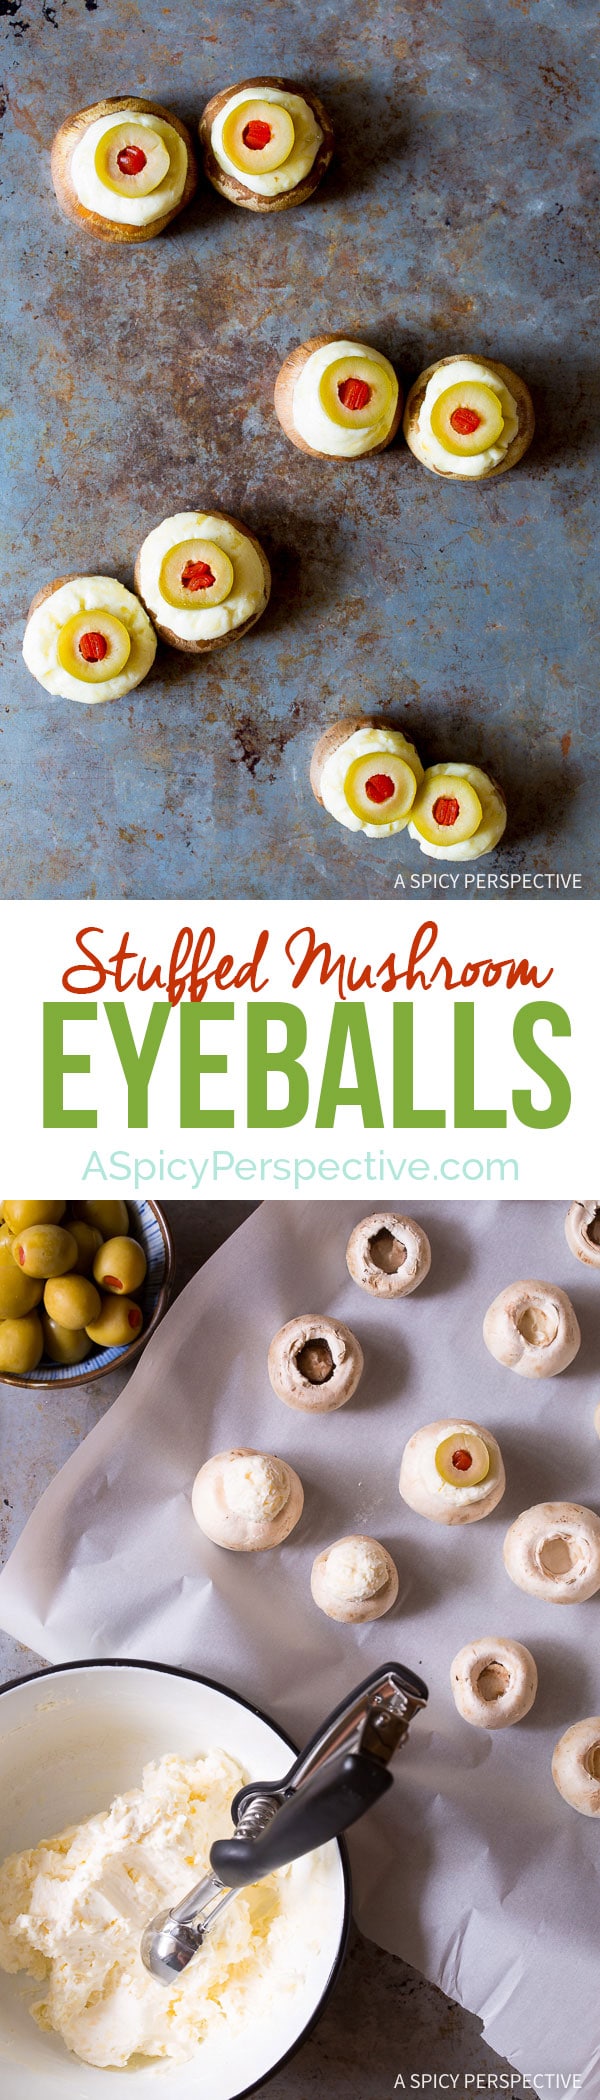 Spooky 5-ingredient Stuffed Mushroom Eyeballs for Halloween on ASpicyPerspective.com 